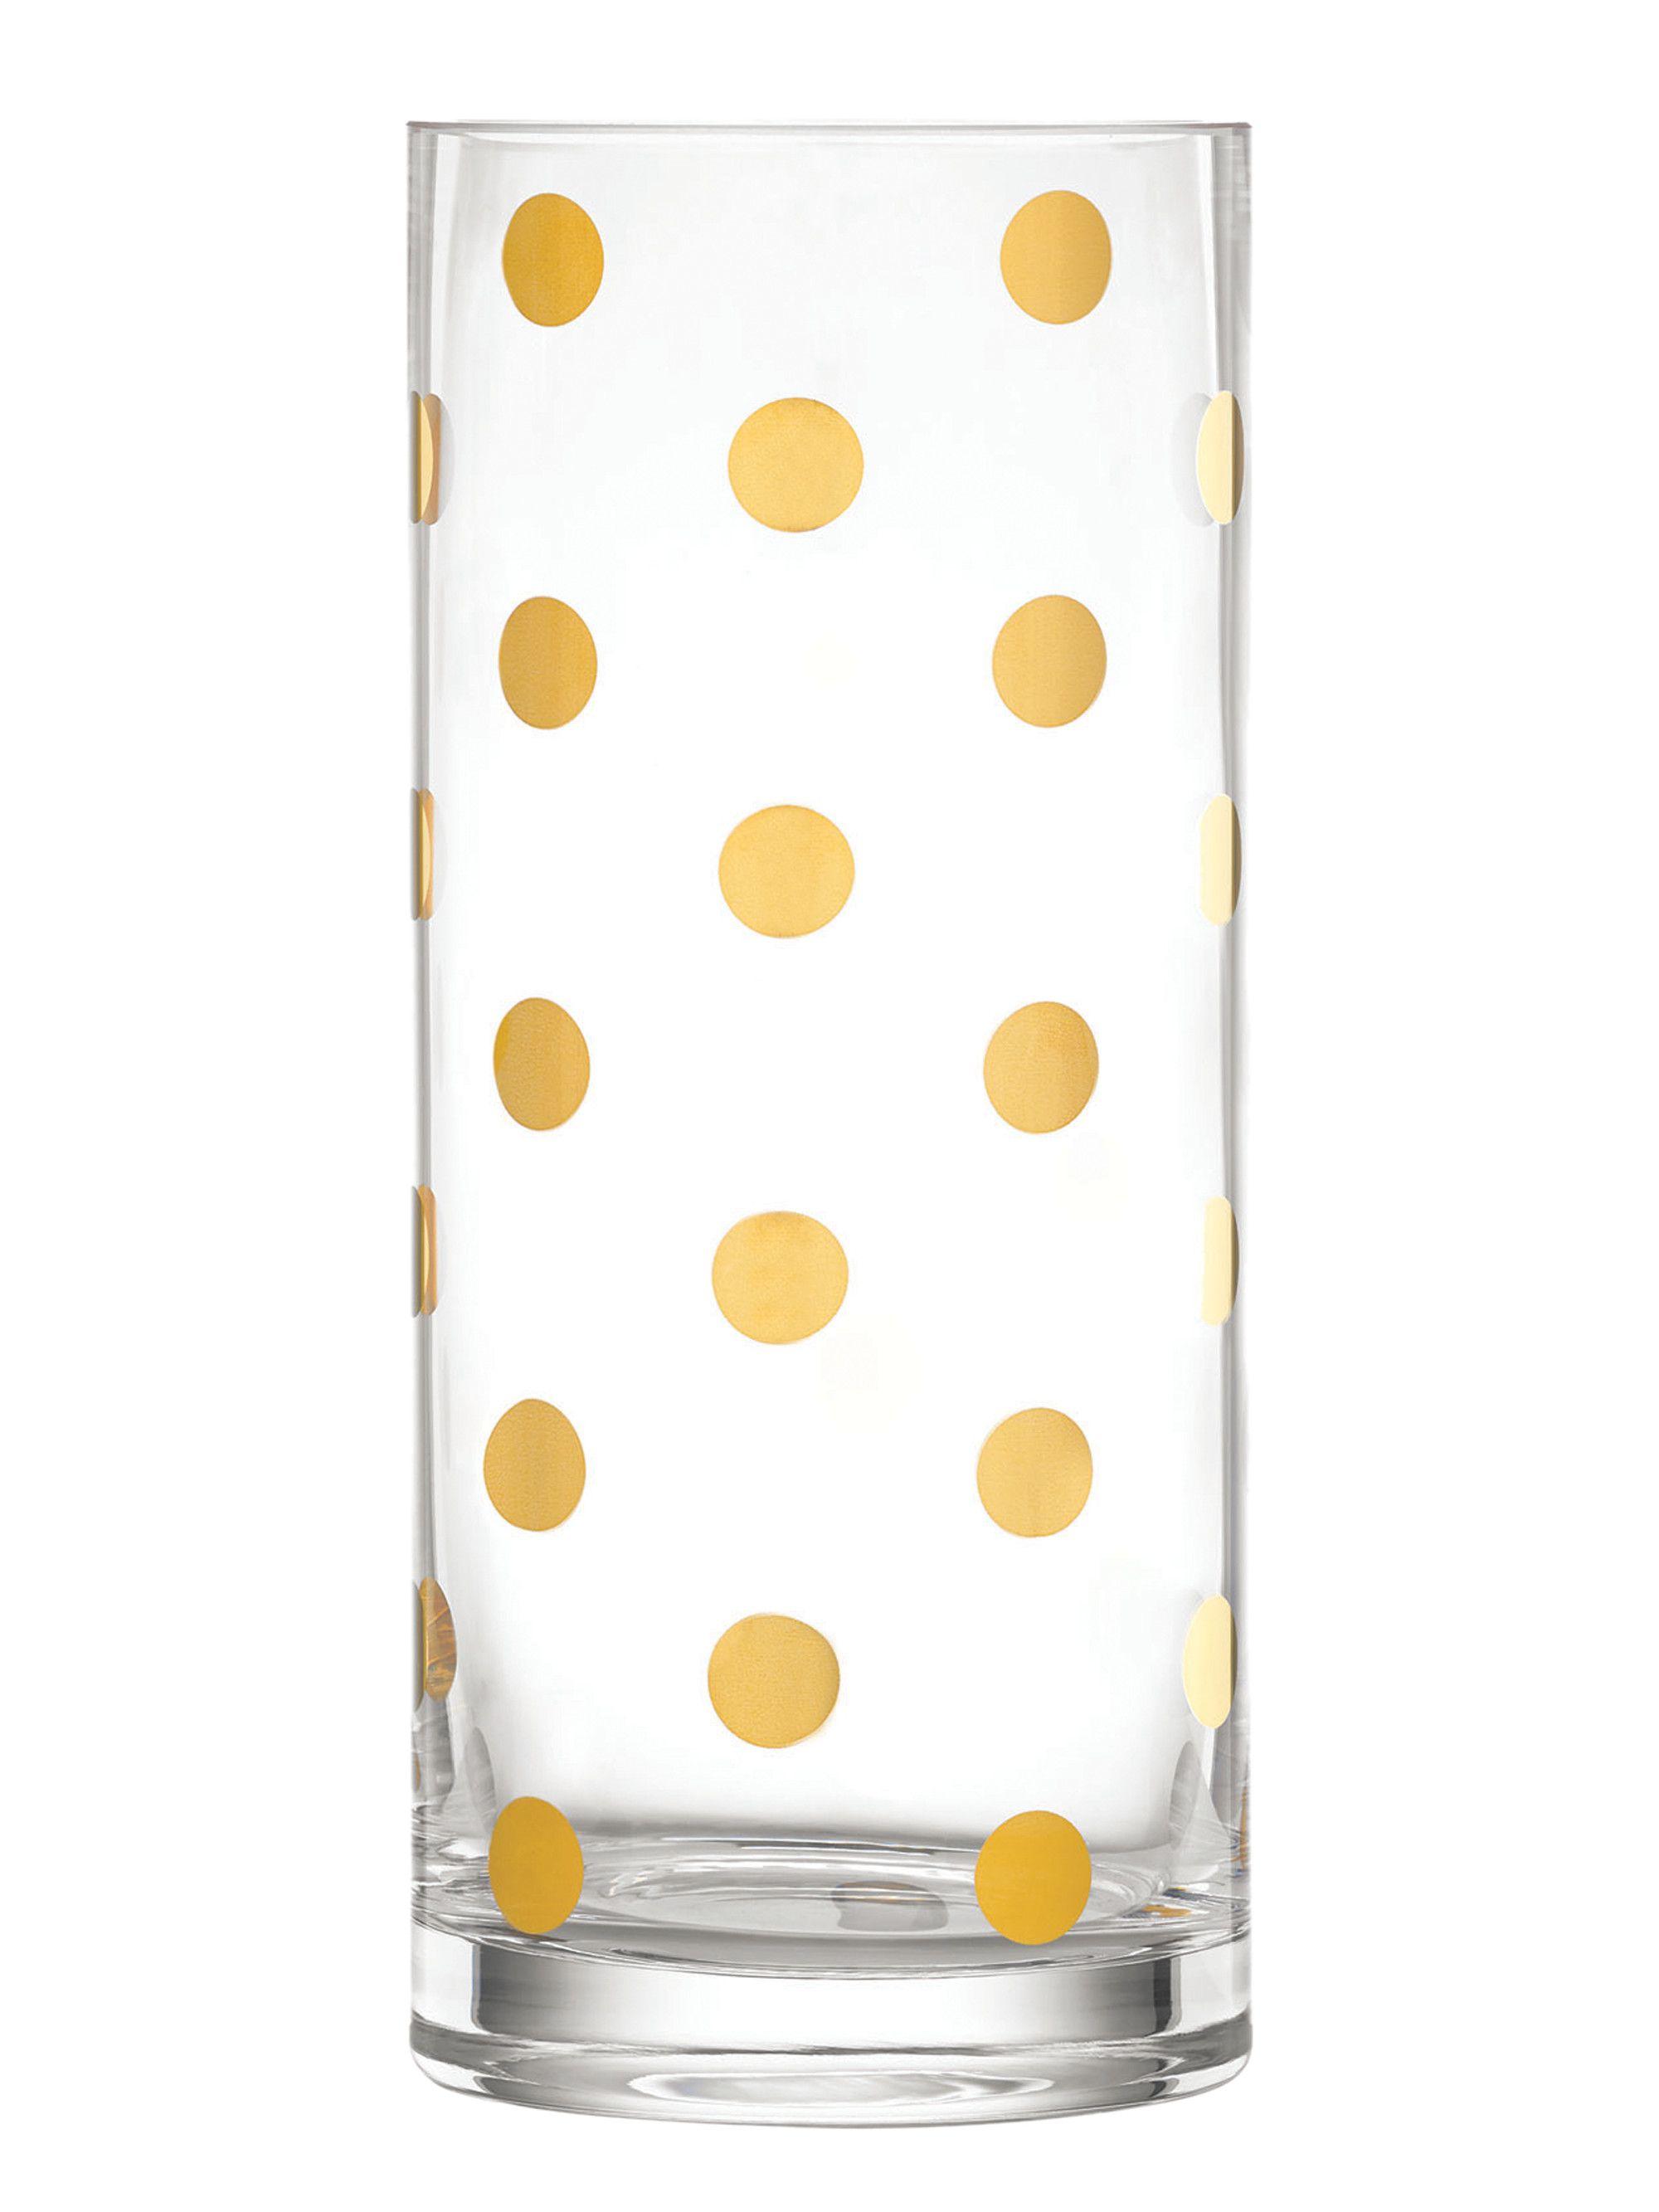 Gold Kate Spade Logo - pearl place vase | Kate Spade New York